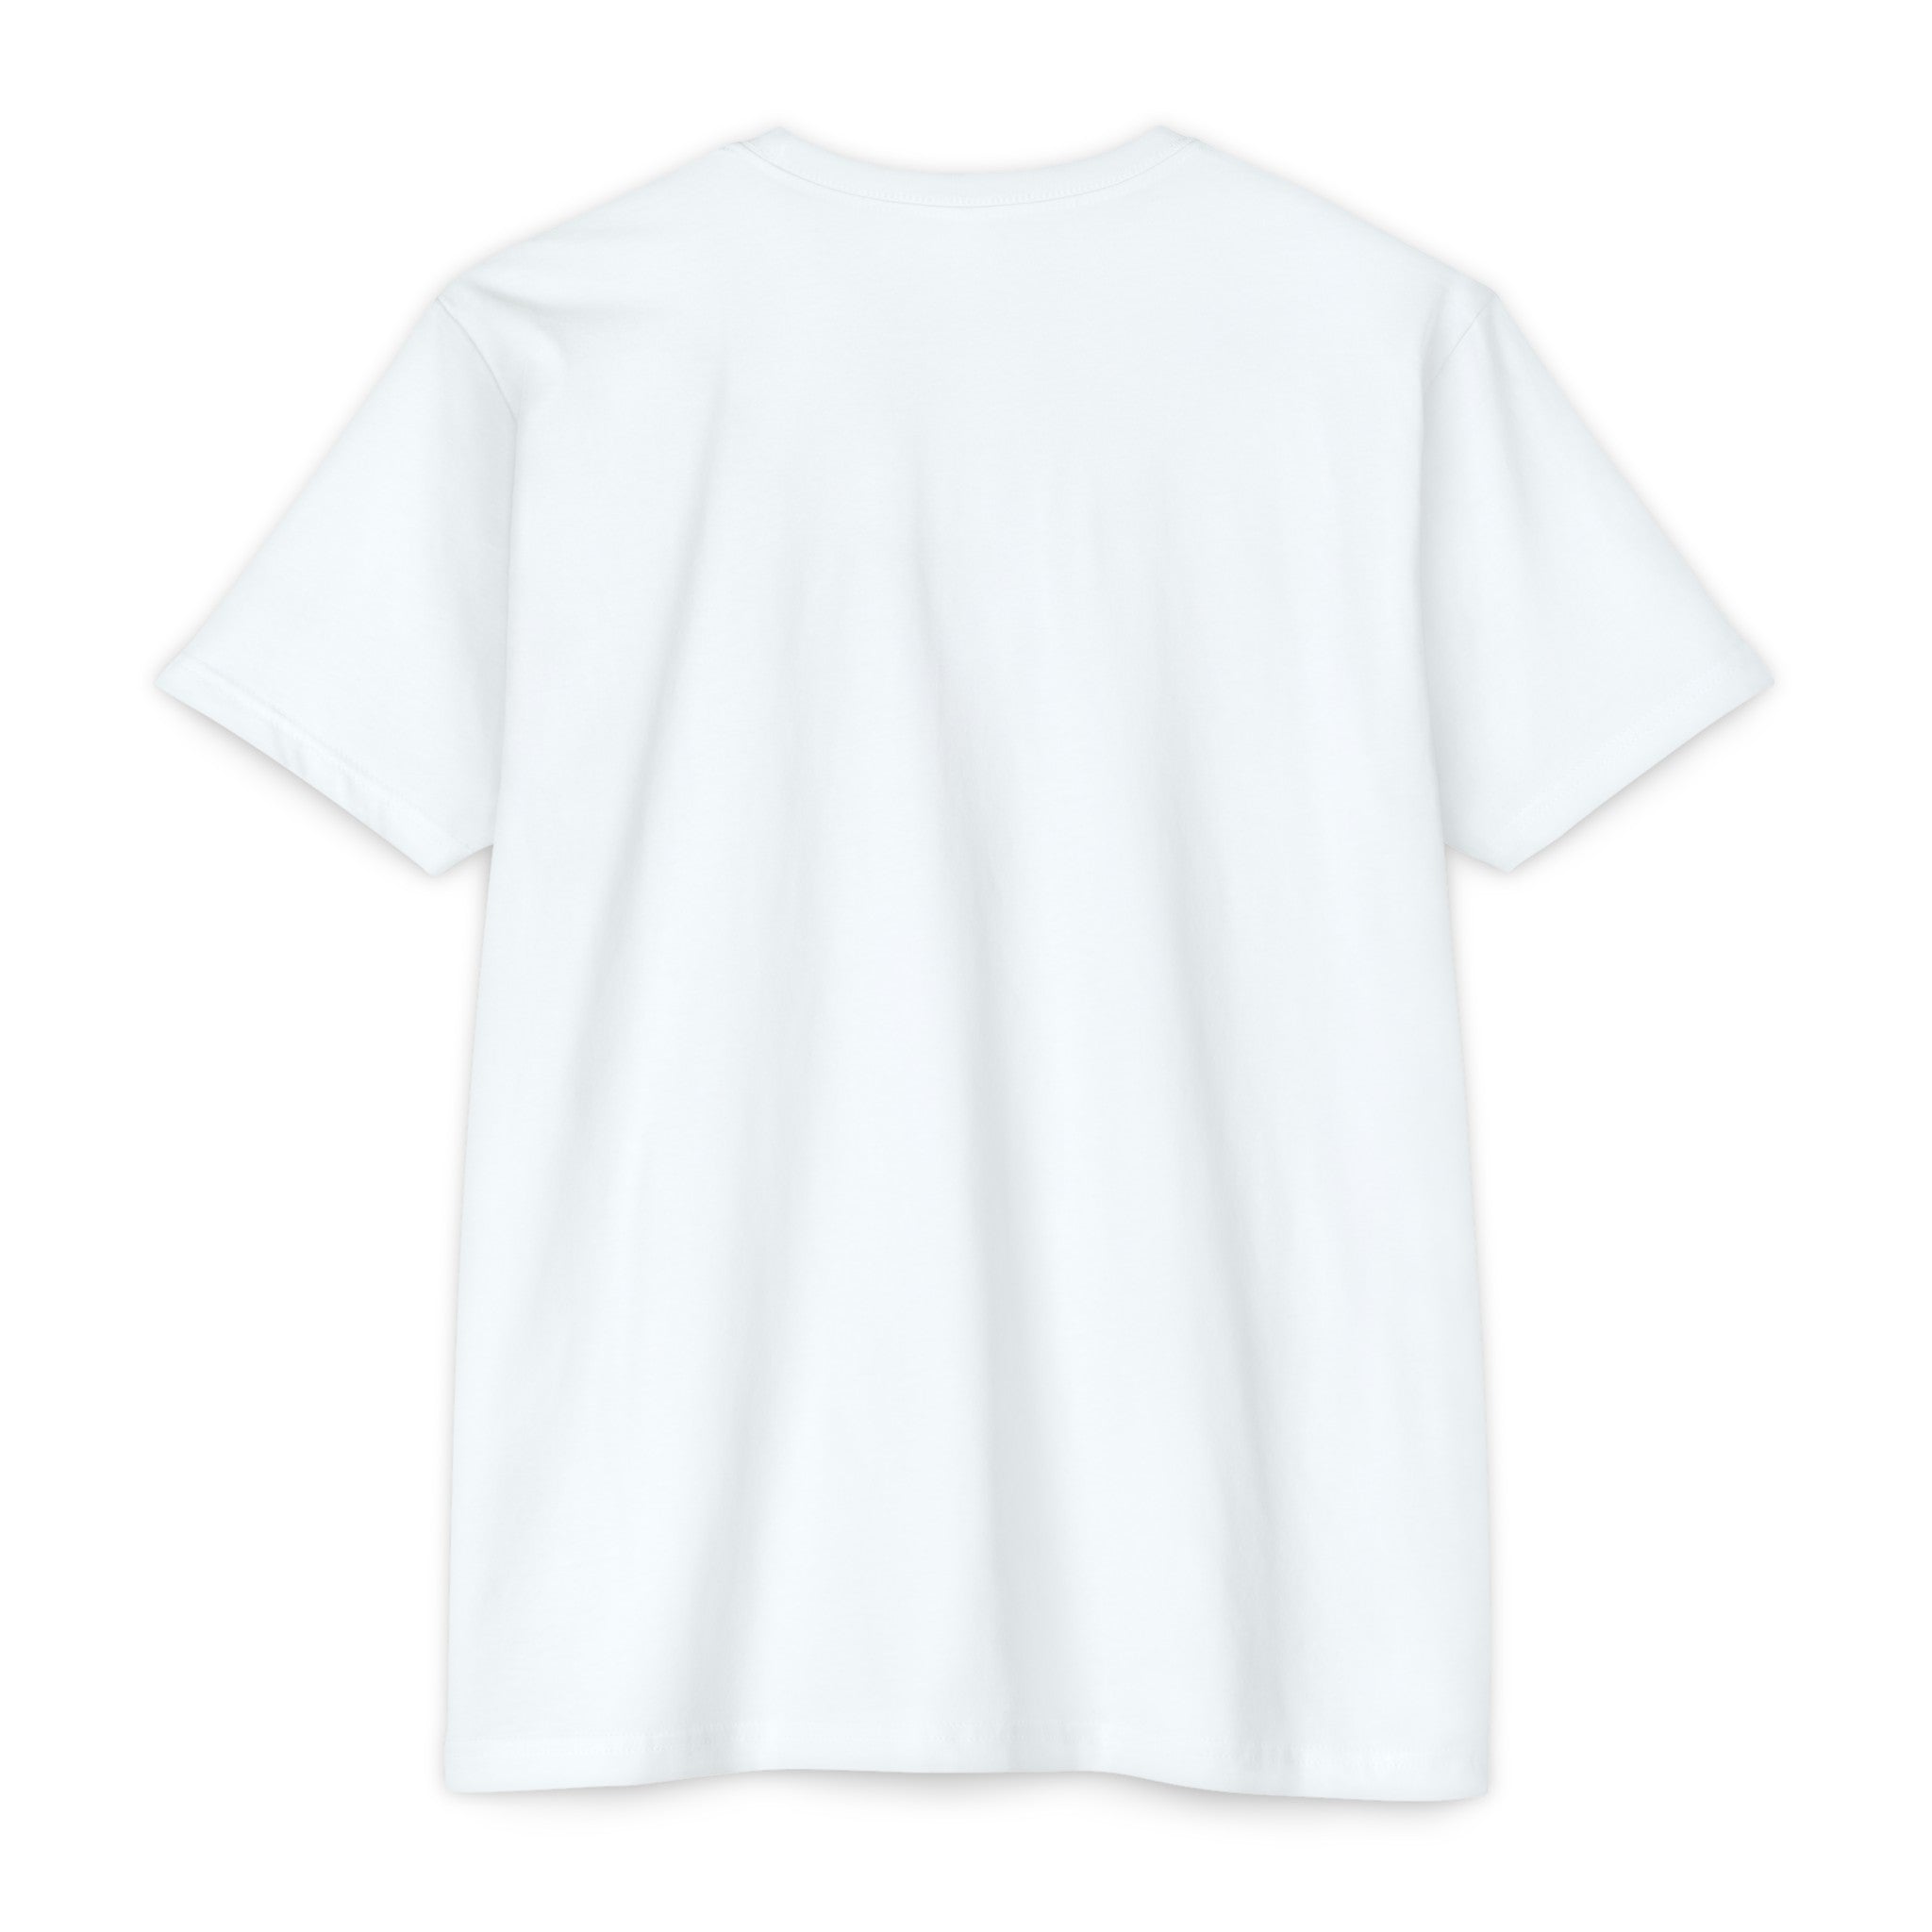 Power Verse: Infinity Gauntlet Wielding K. Lamar Unisex CVC Jersey T-Shirt